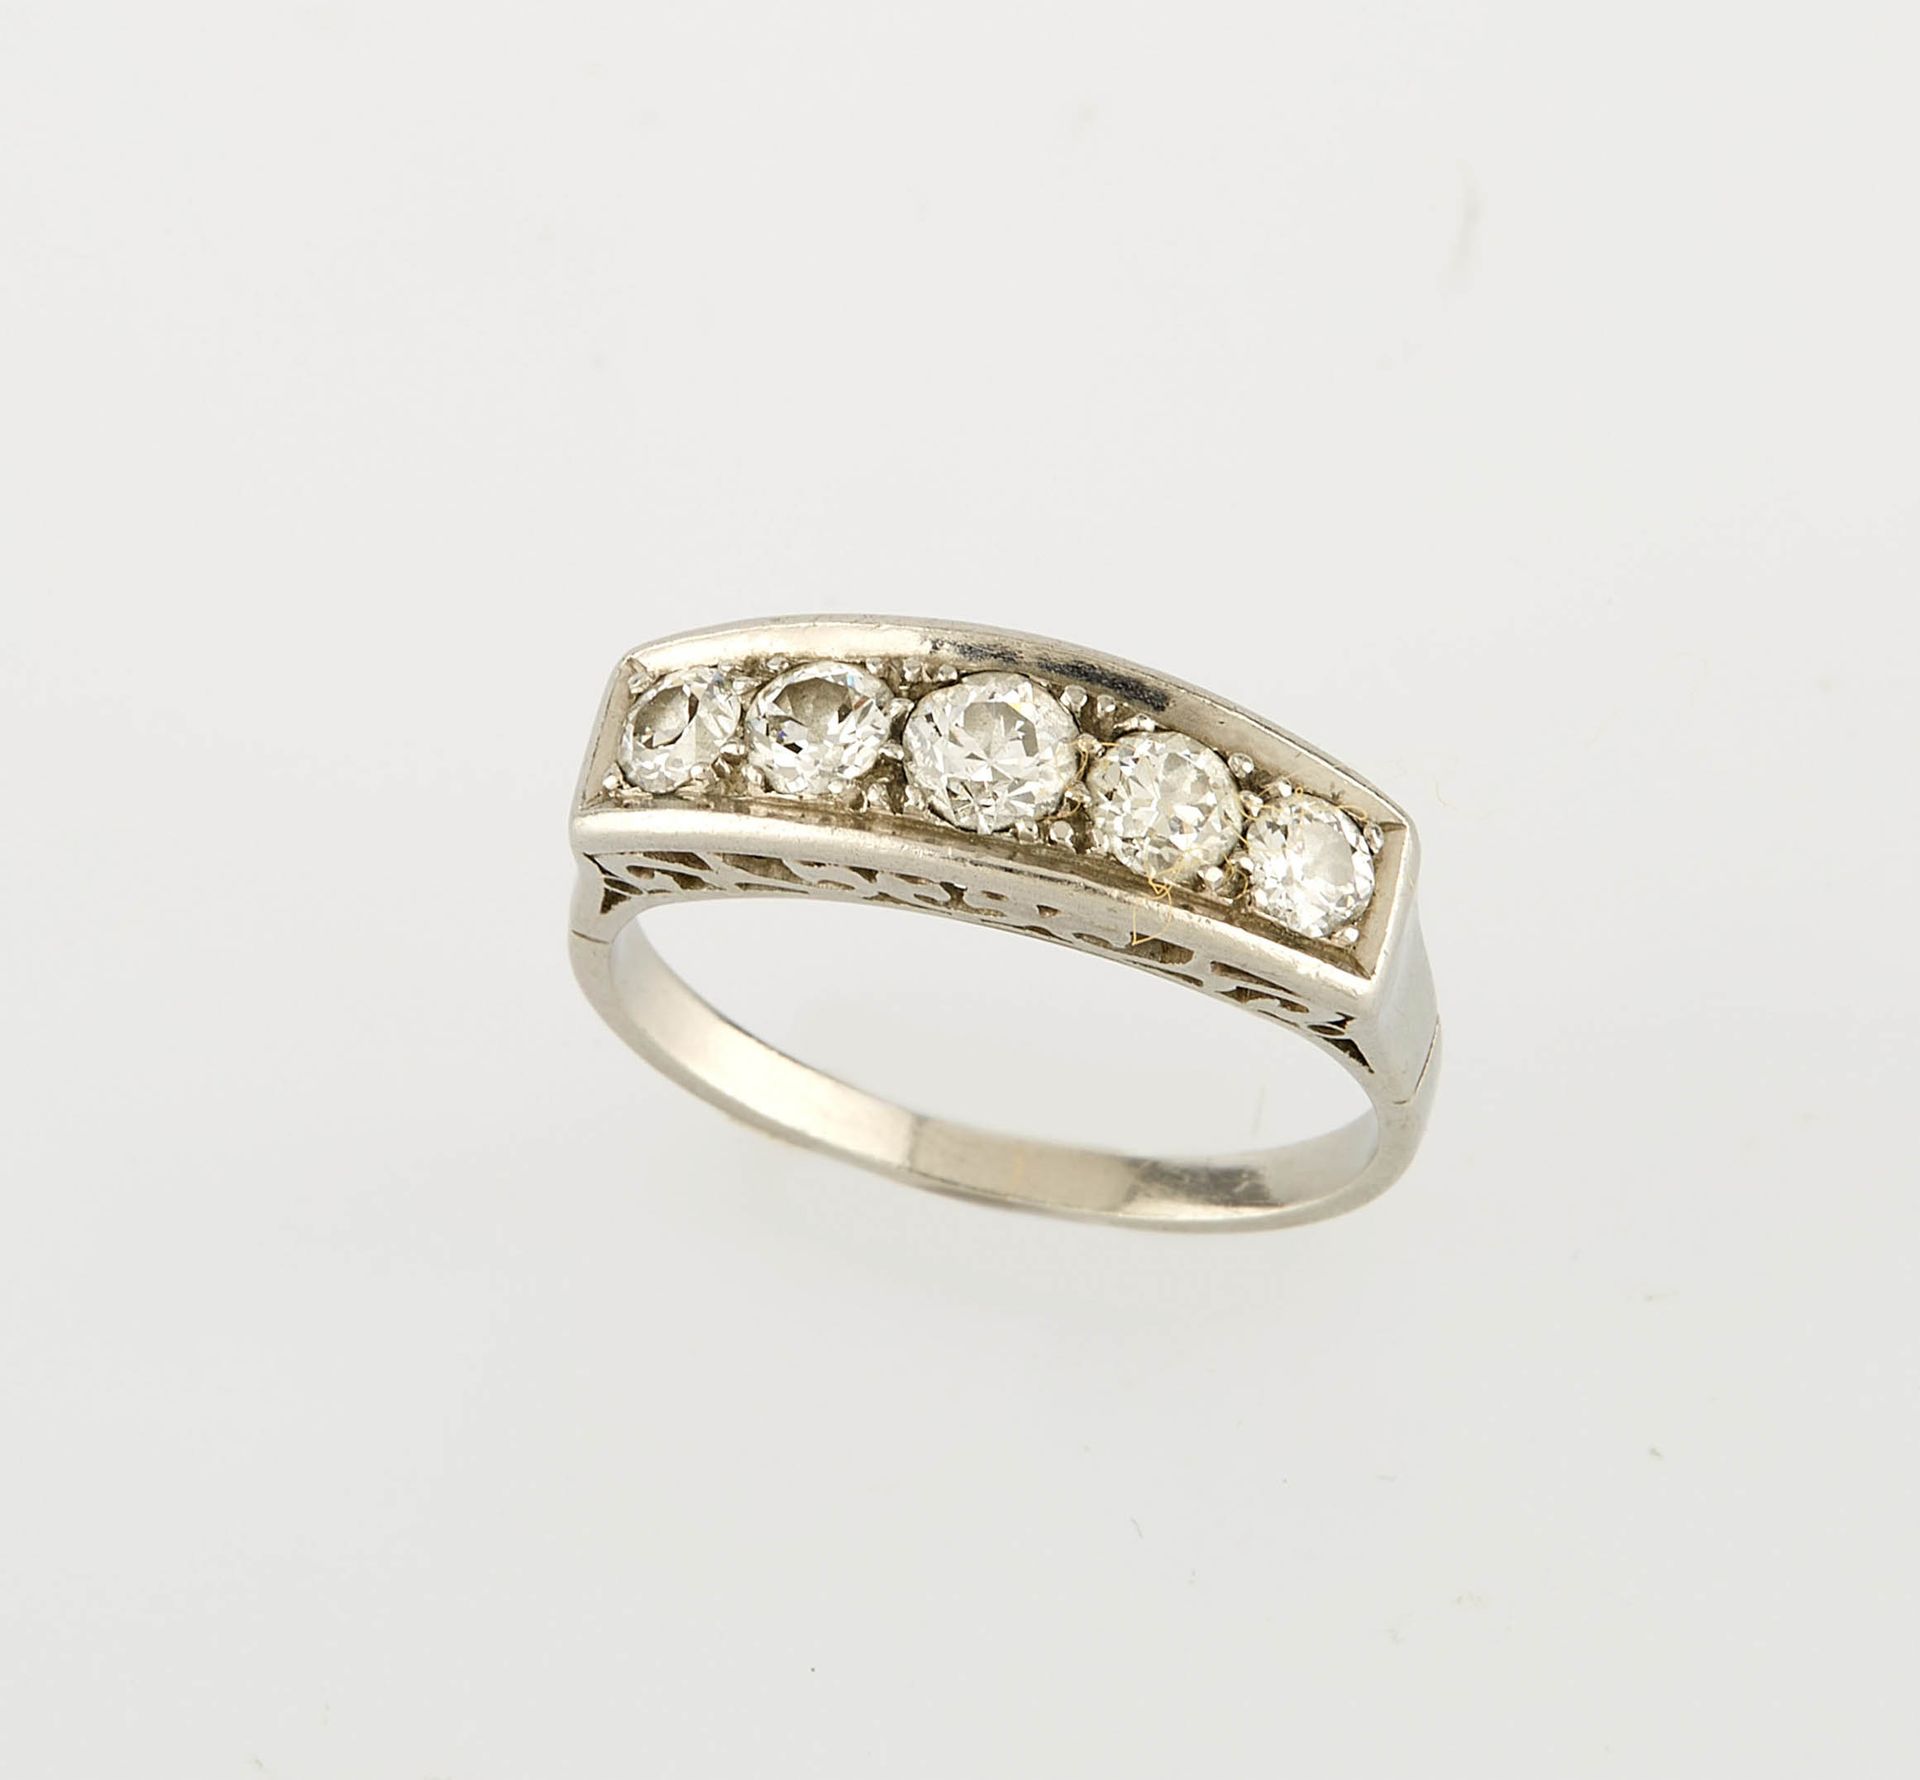 Null 铂金 "河流 "戒指，镶嵌五颗旧式切割钻石。镂空设置。手指大小：52.5。重量：4.60克。